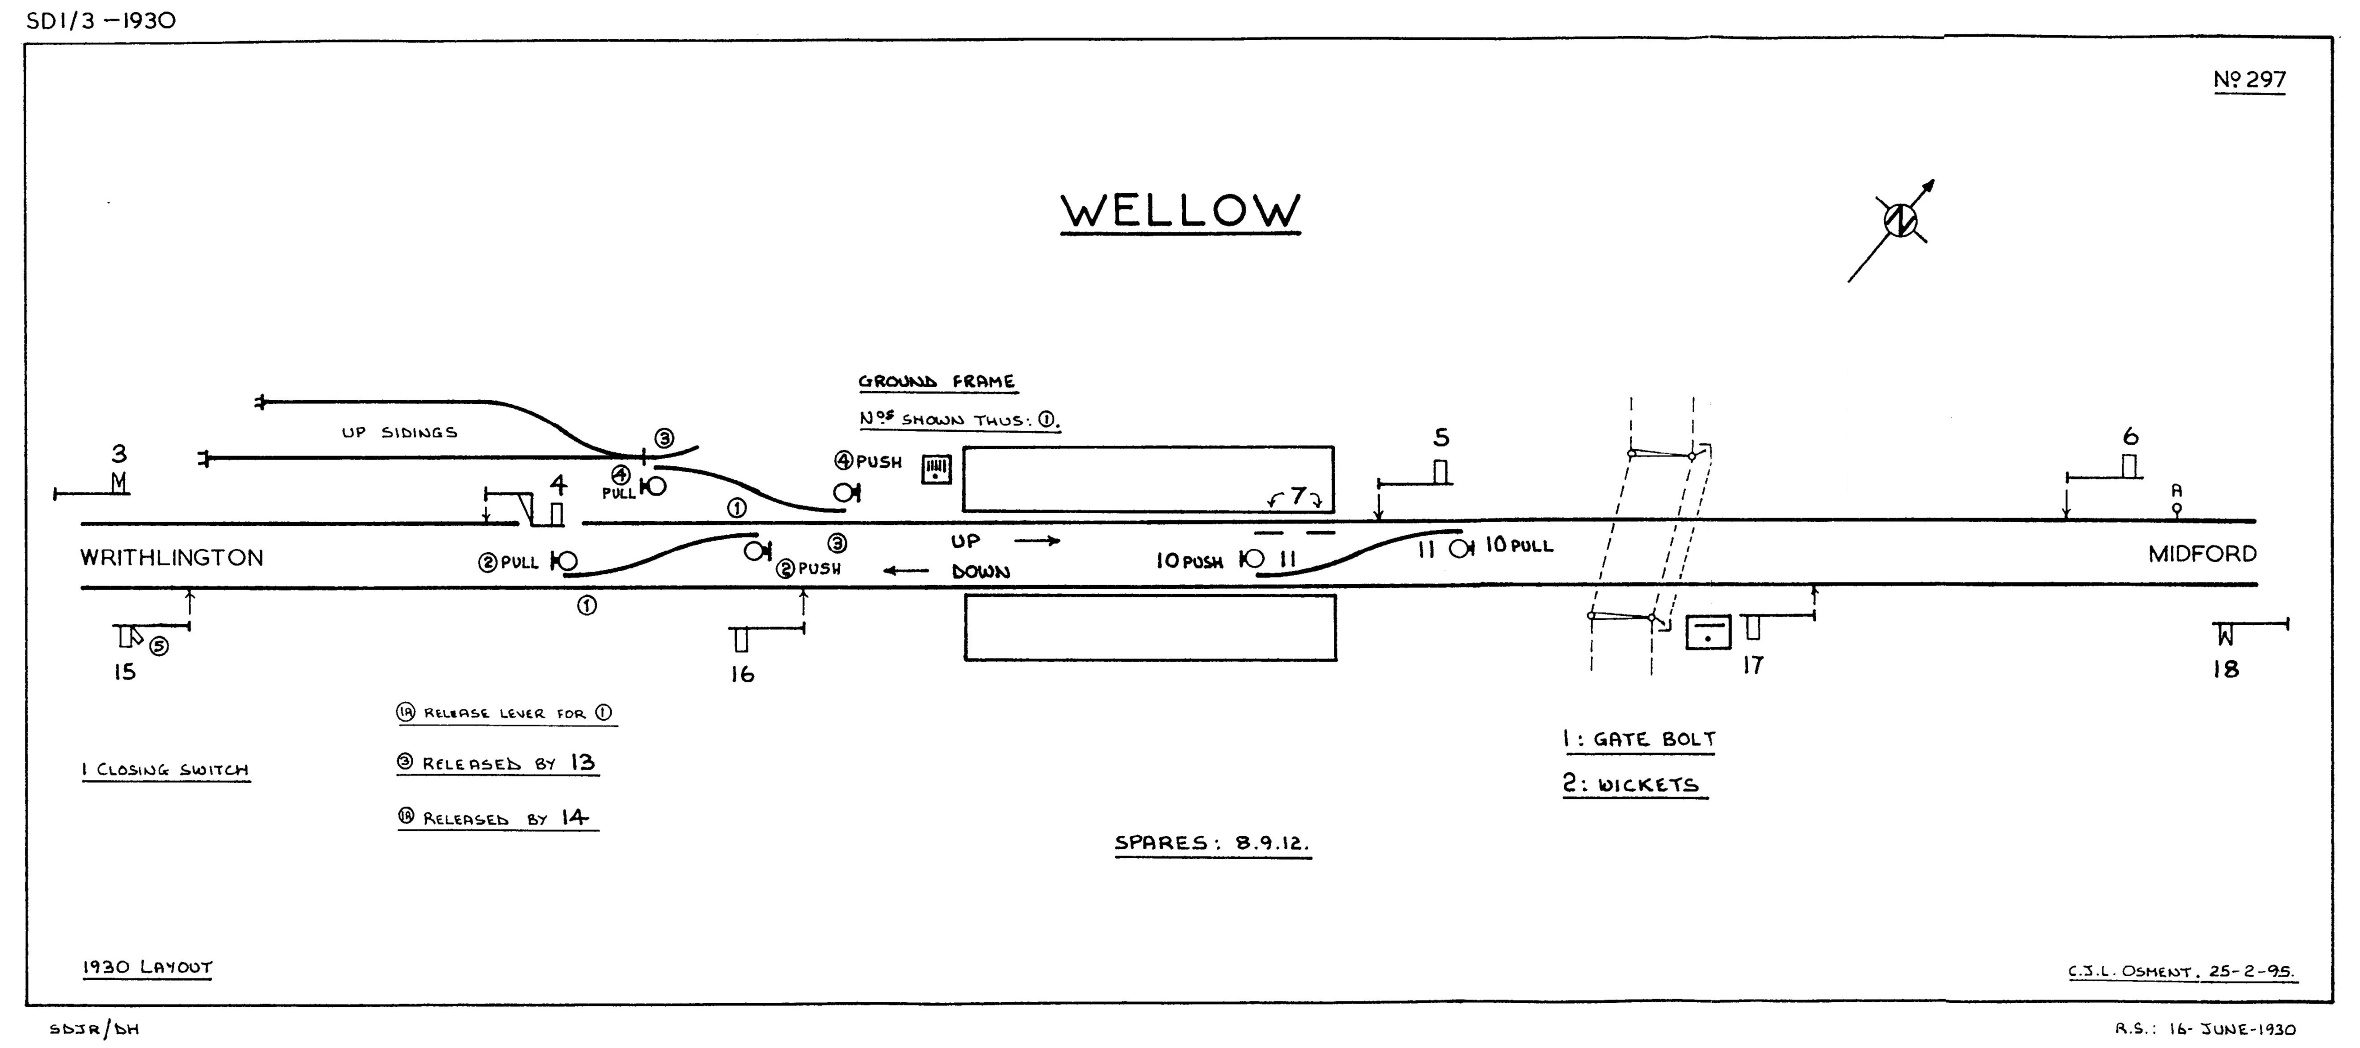 Wellow signal-box diagram 1930